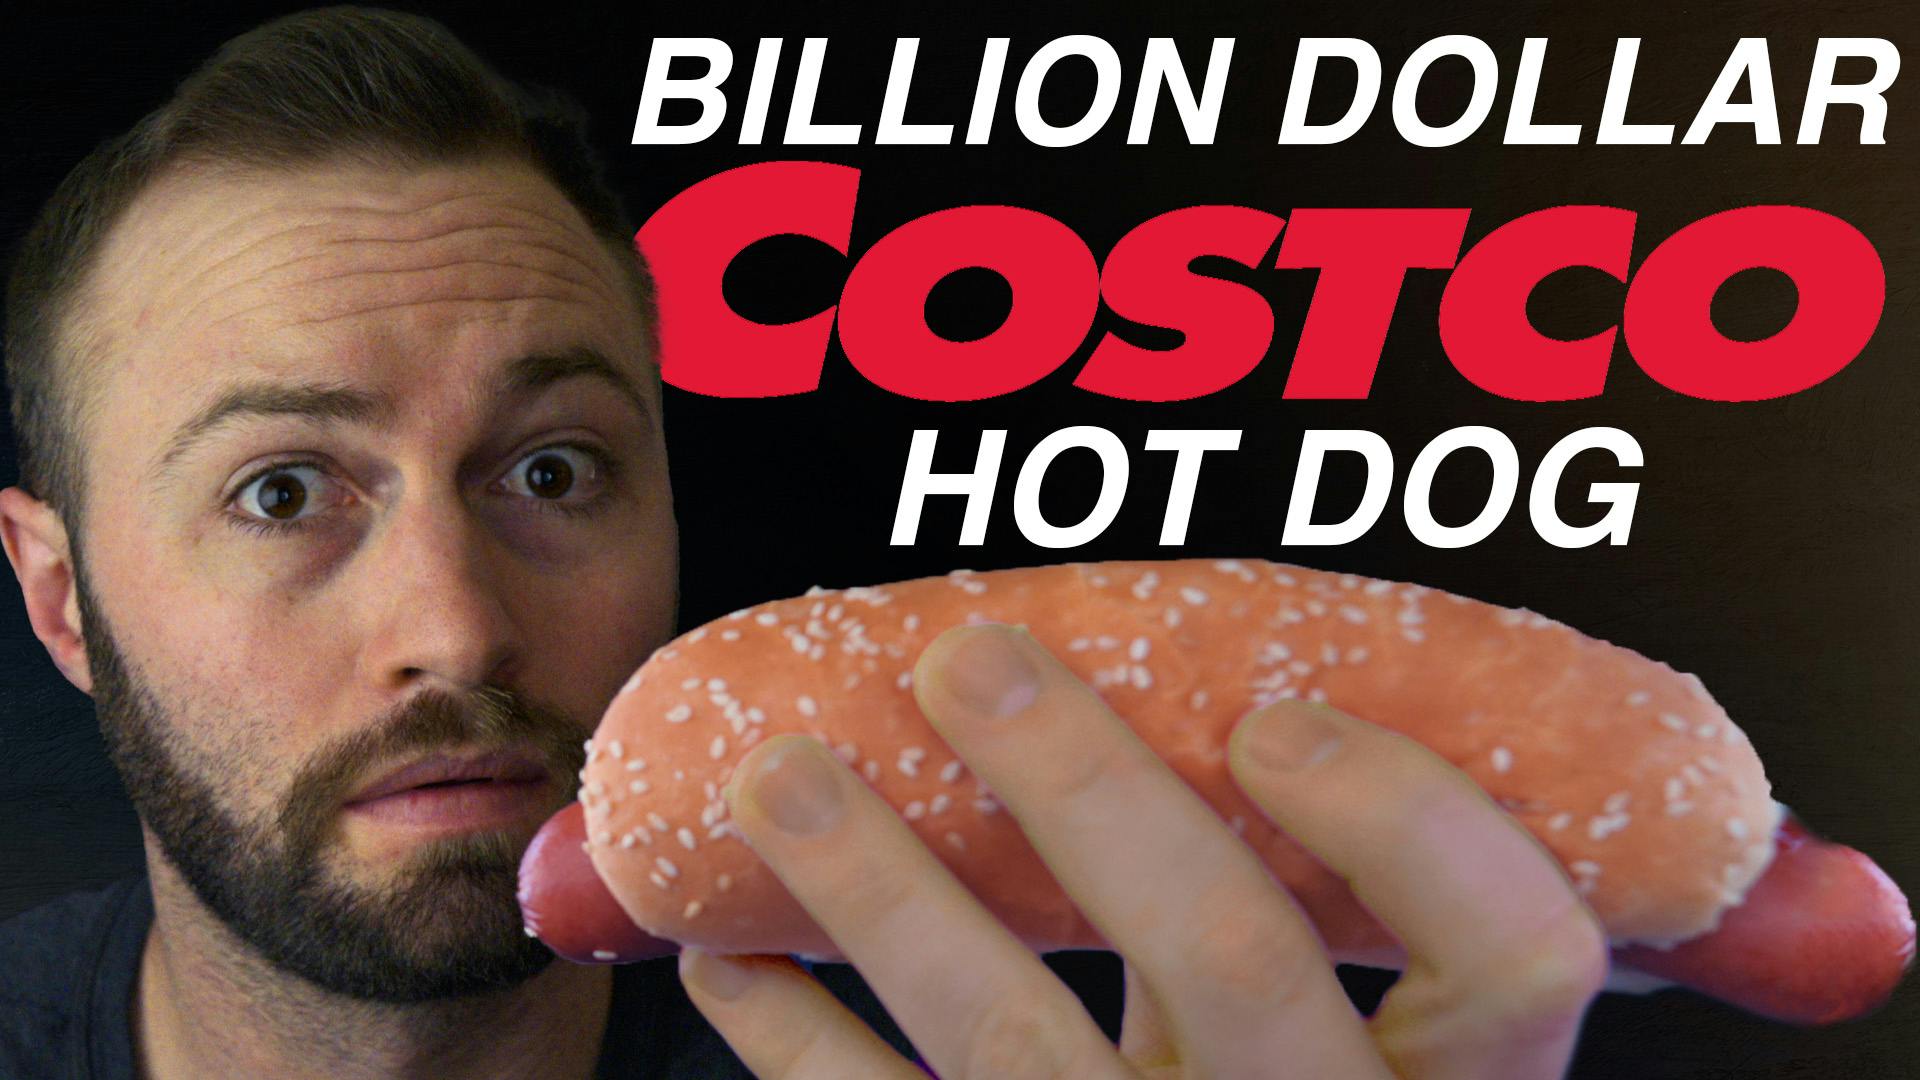 Billion Dollar Costco Hot Dog featuring Ben Hillman and a Costco Hot Dog